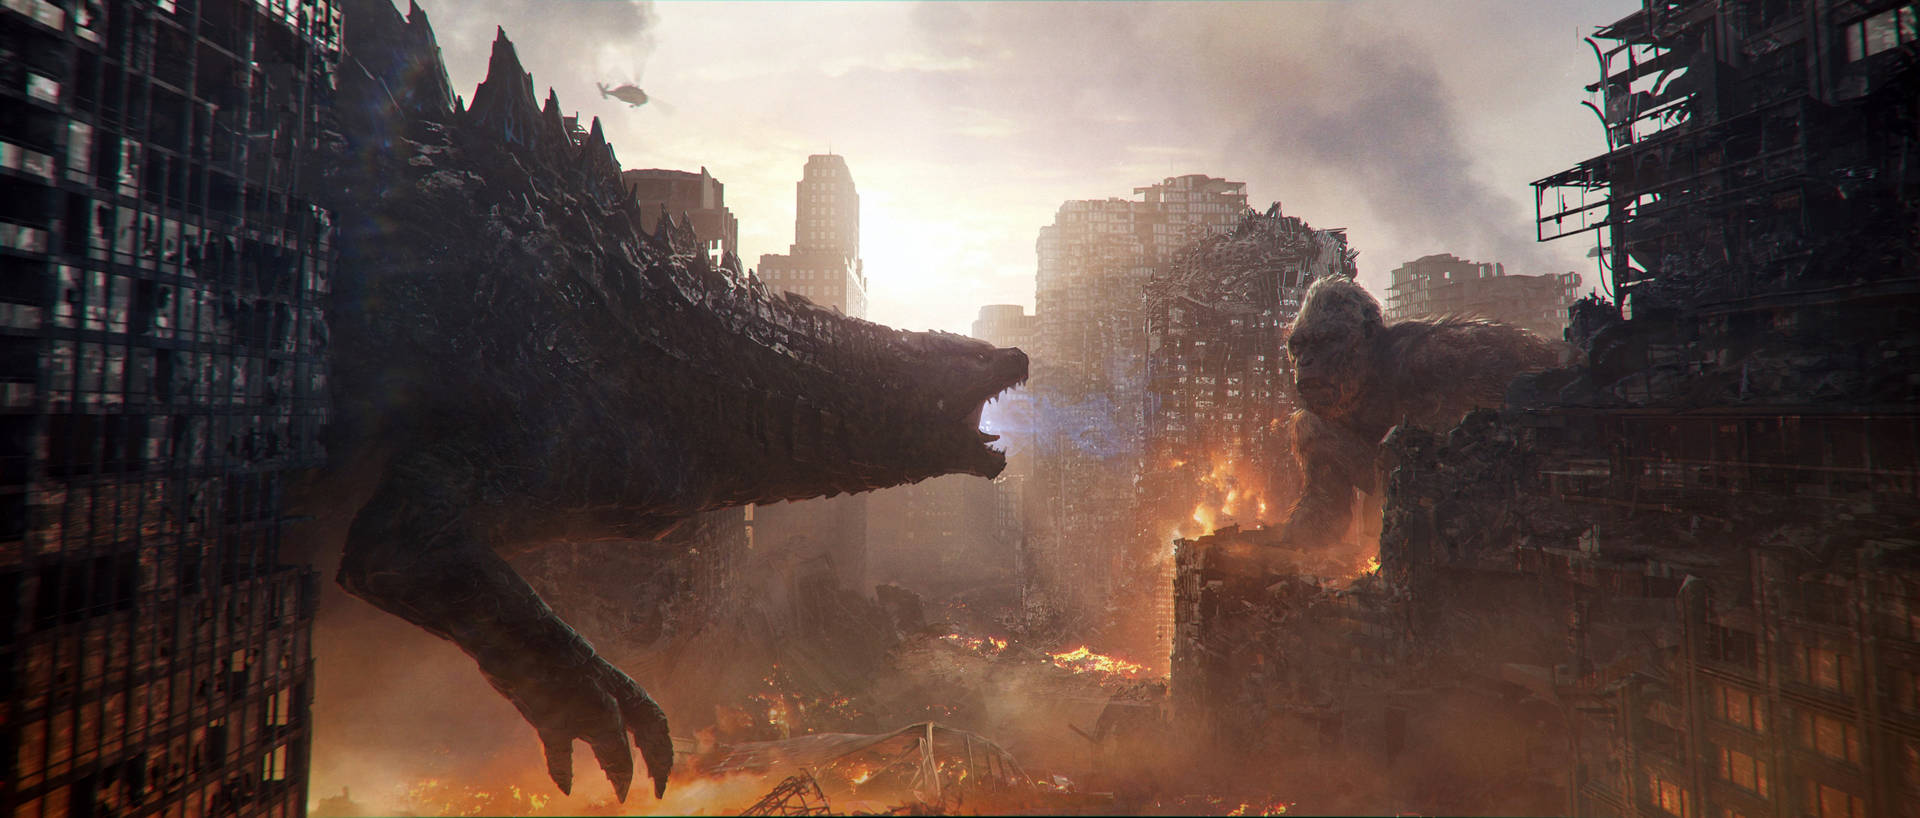 Godzillagegen King Kong - Hintergrundbild. Wallpaper